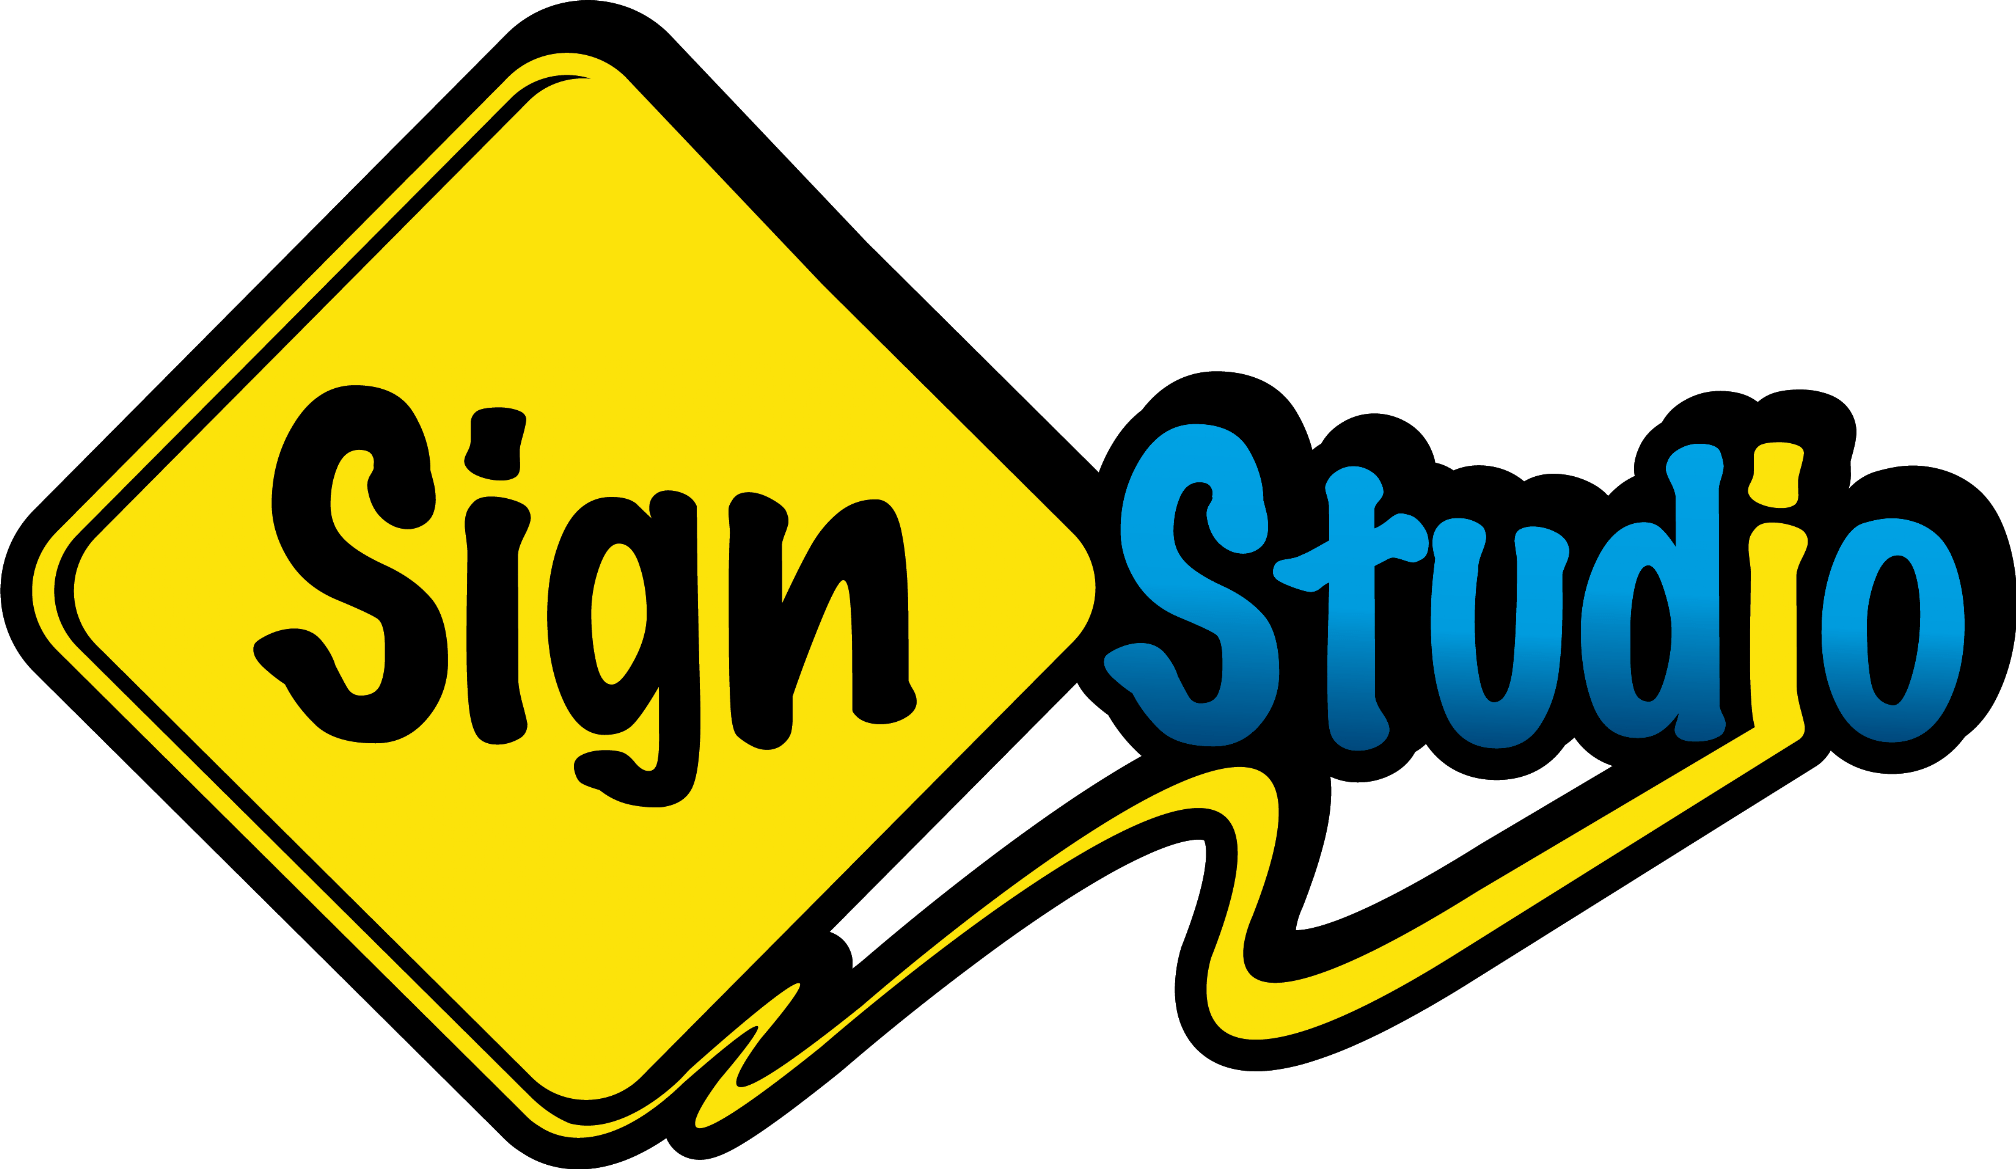 Sign Studio